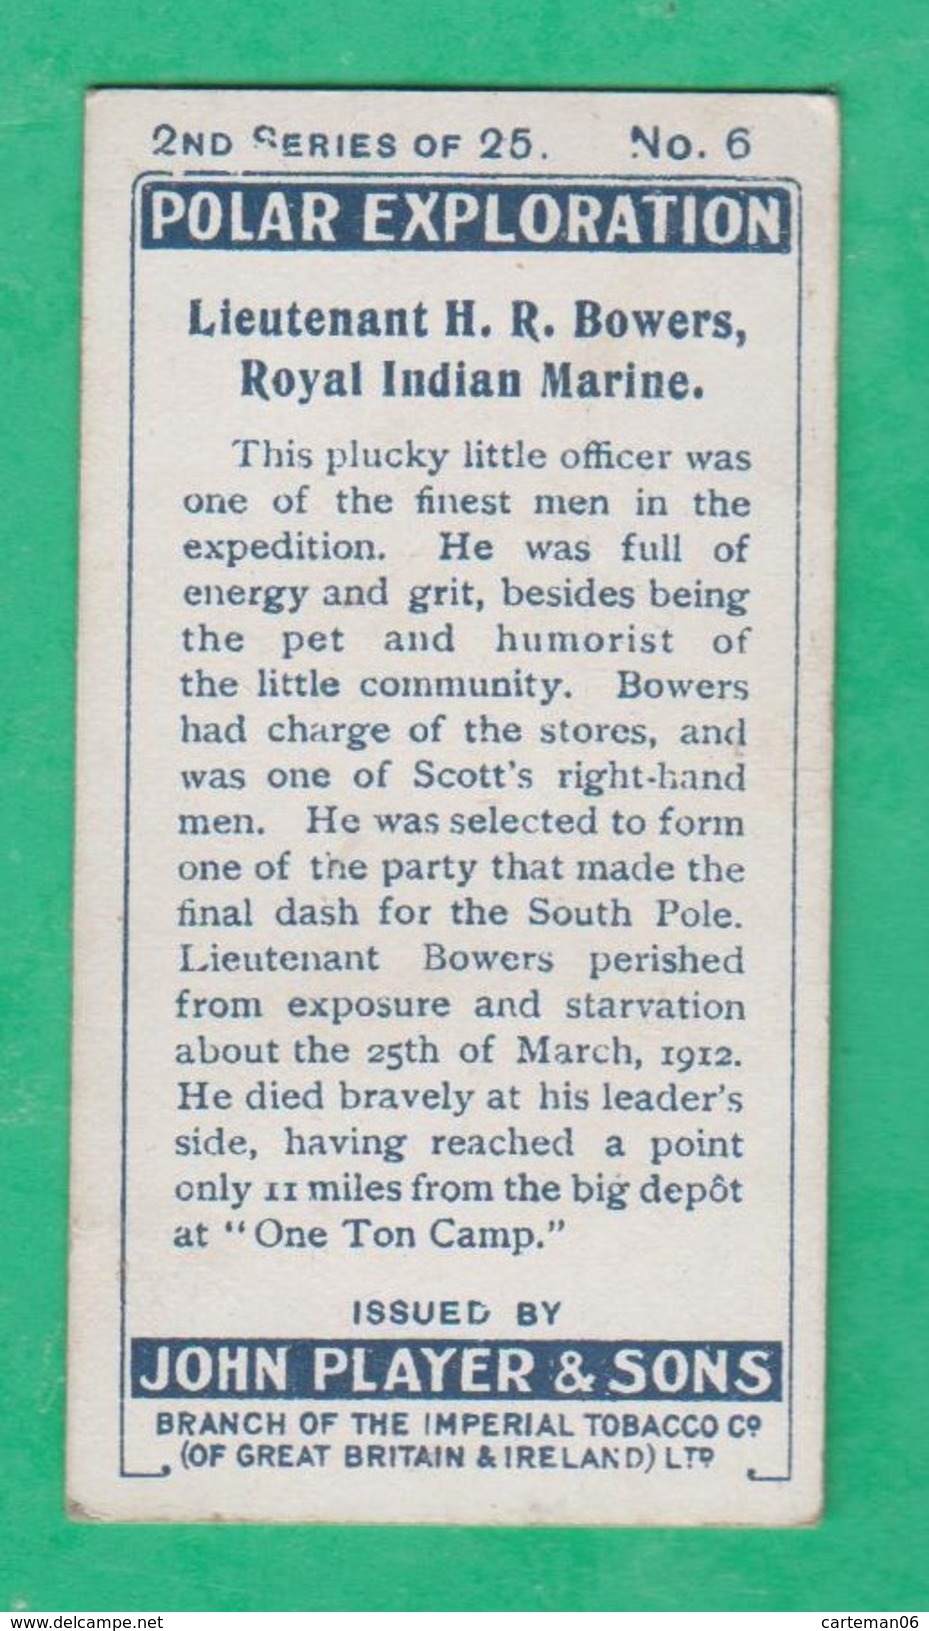 John Player, Player's Cigarettes, Polar Exploration - Lieutenant H. R Bowers, Royal Indian Marine - Player's